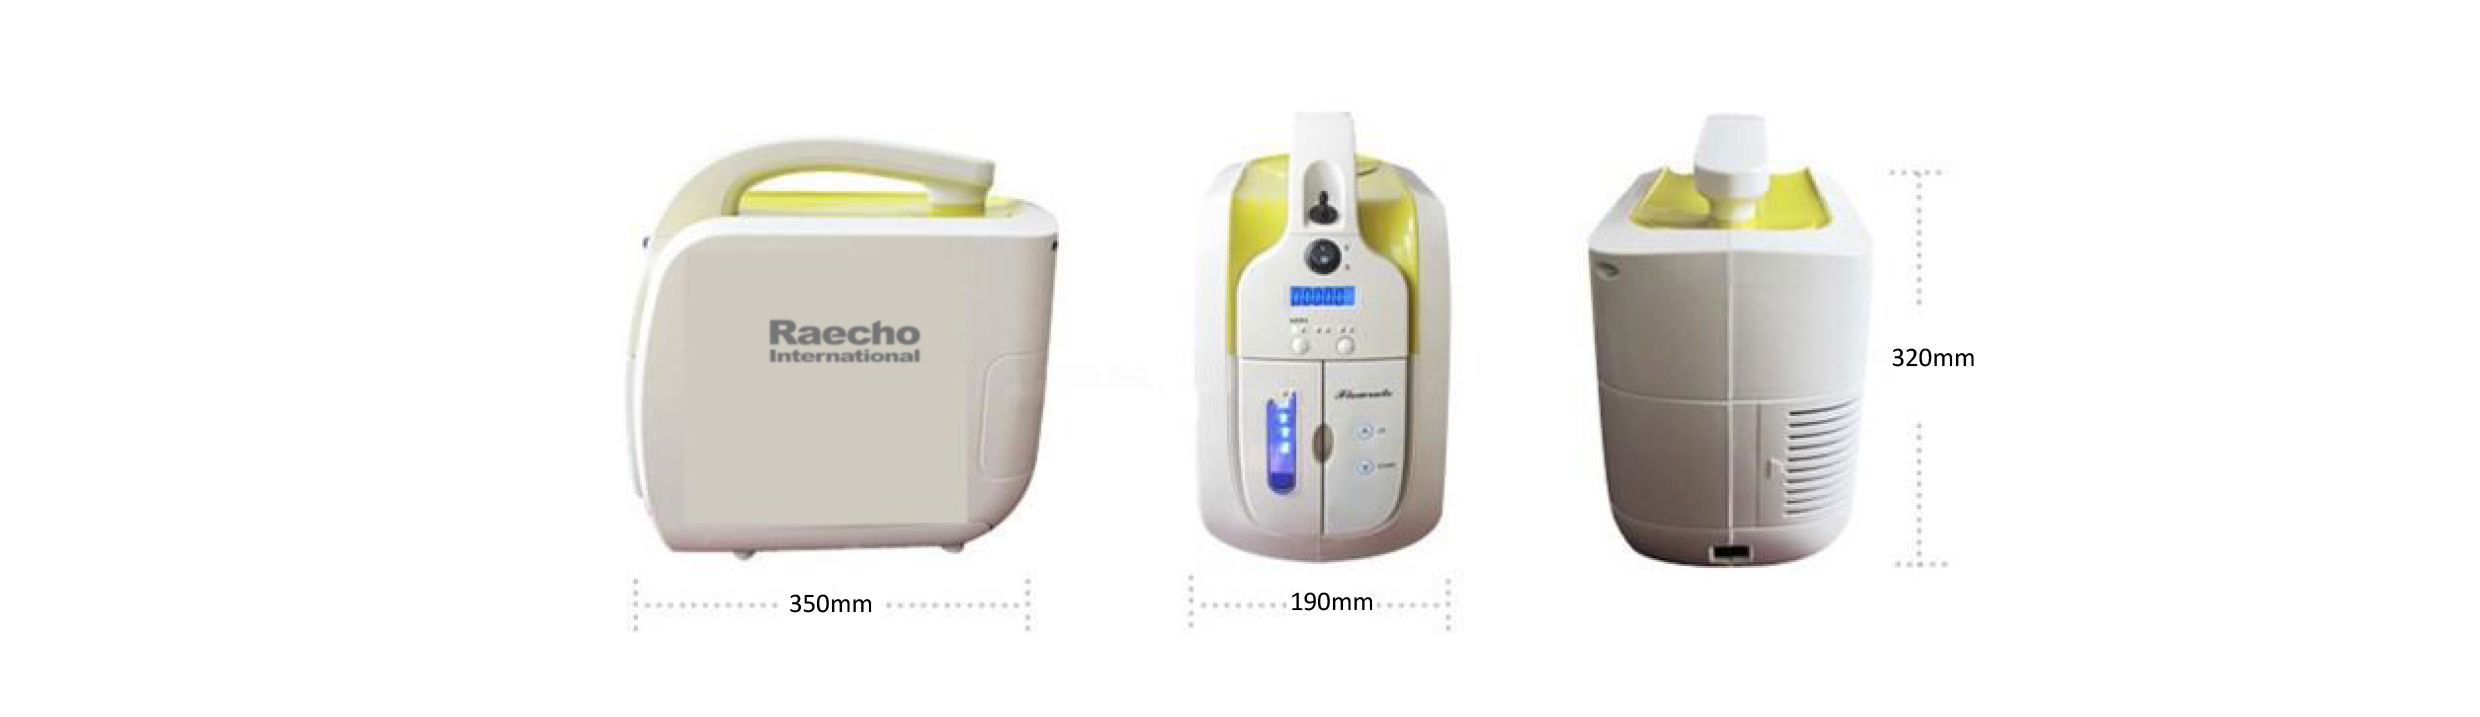 Raecho-Portable Oxygen Concentrator-3.jpg